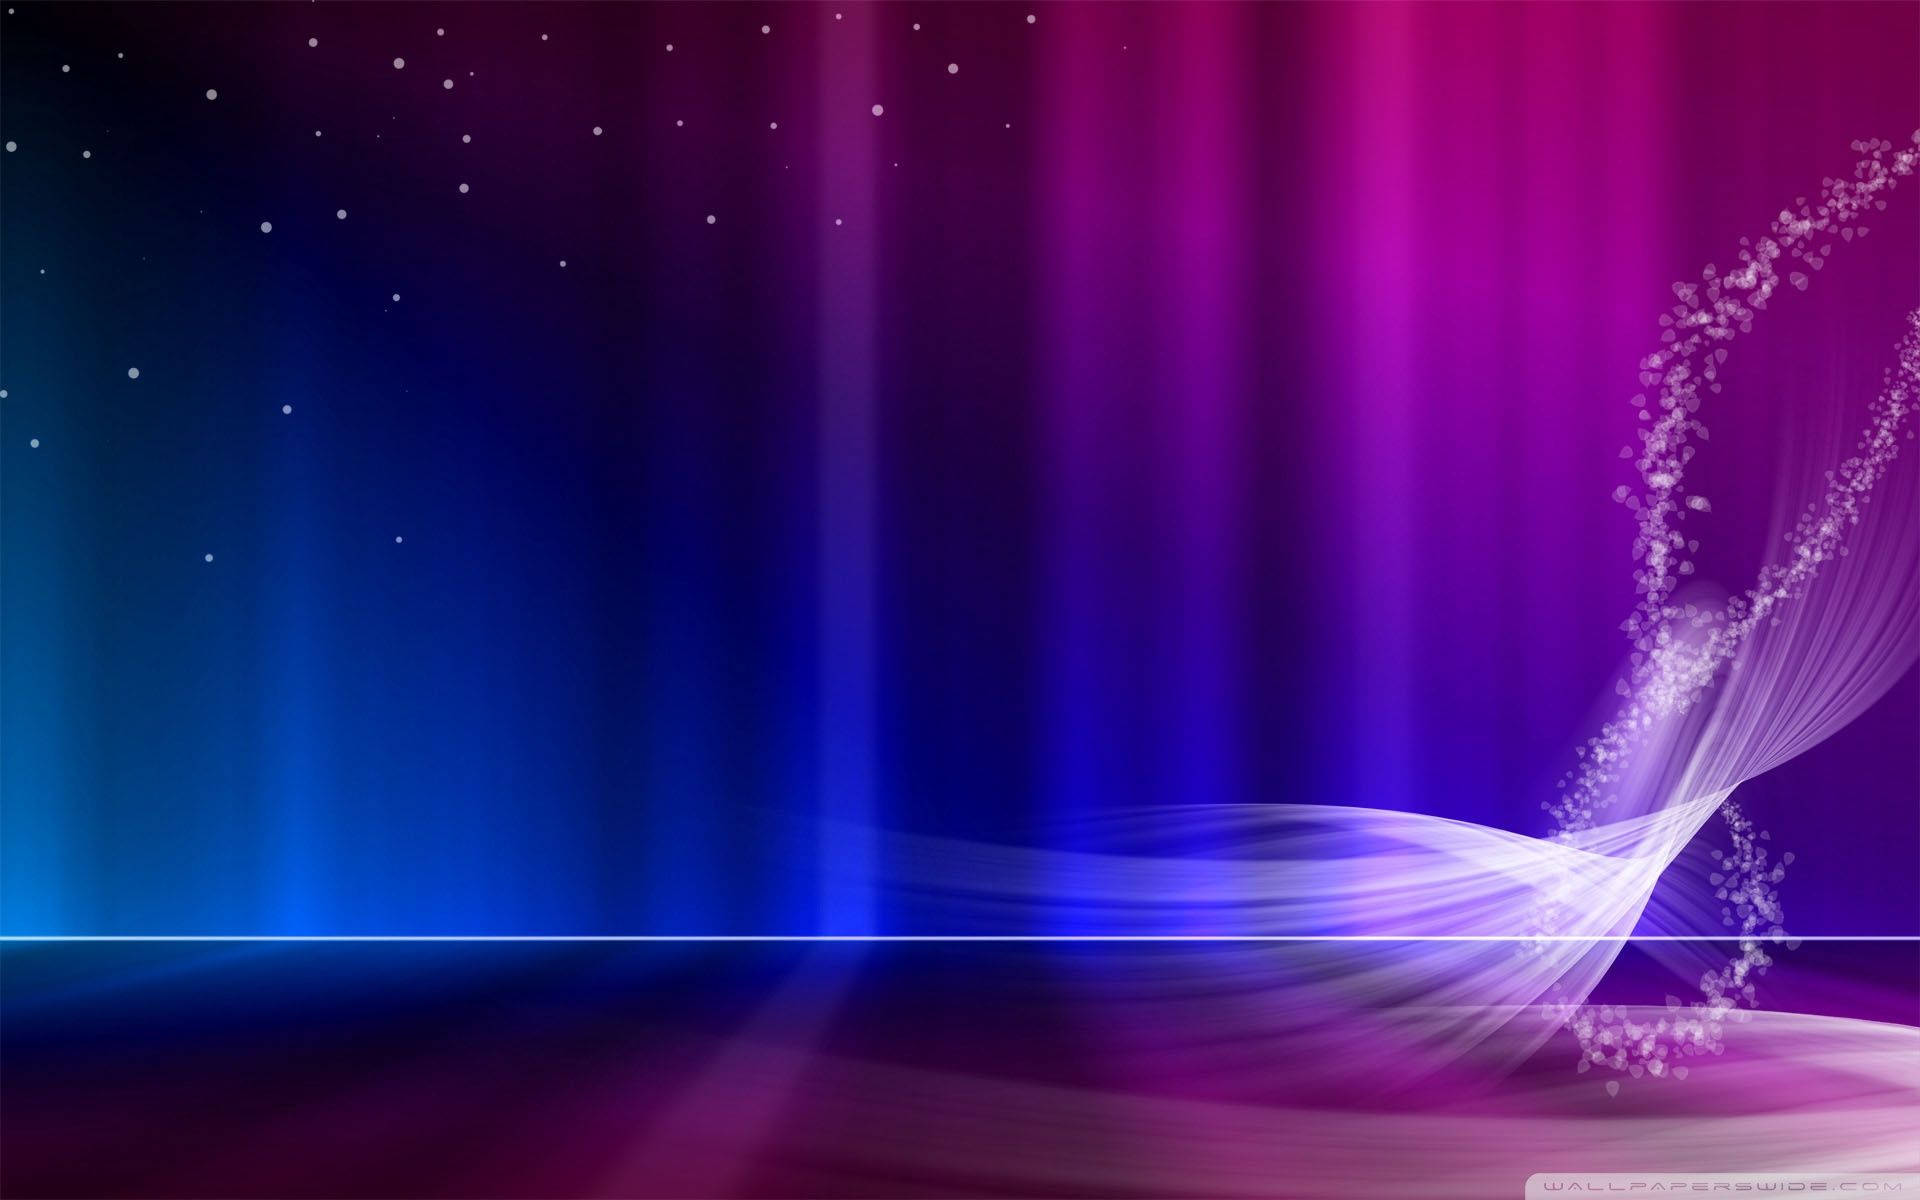 Blue & Violet Windows Vista Background